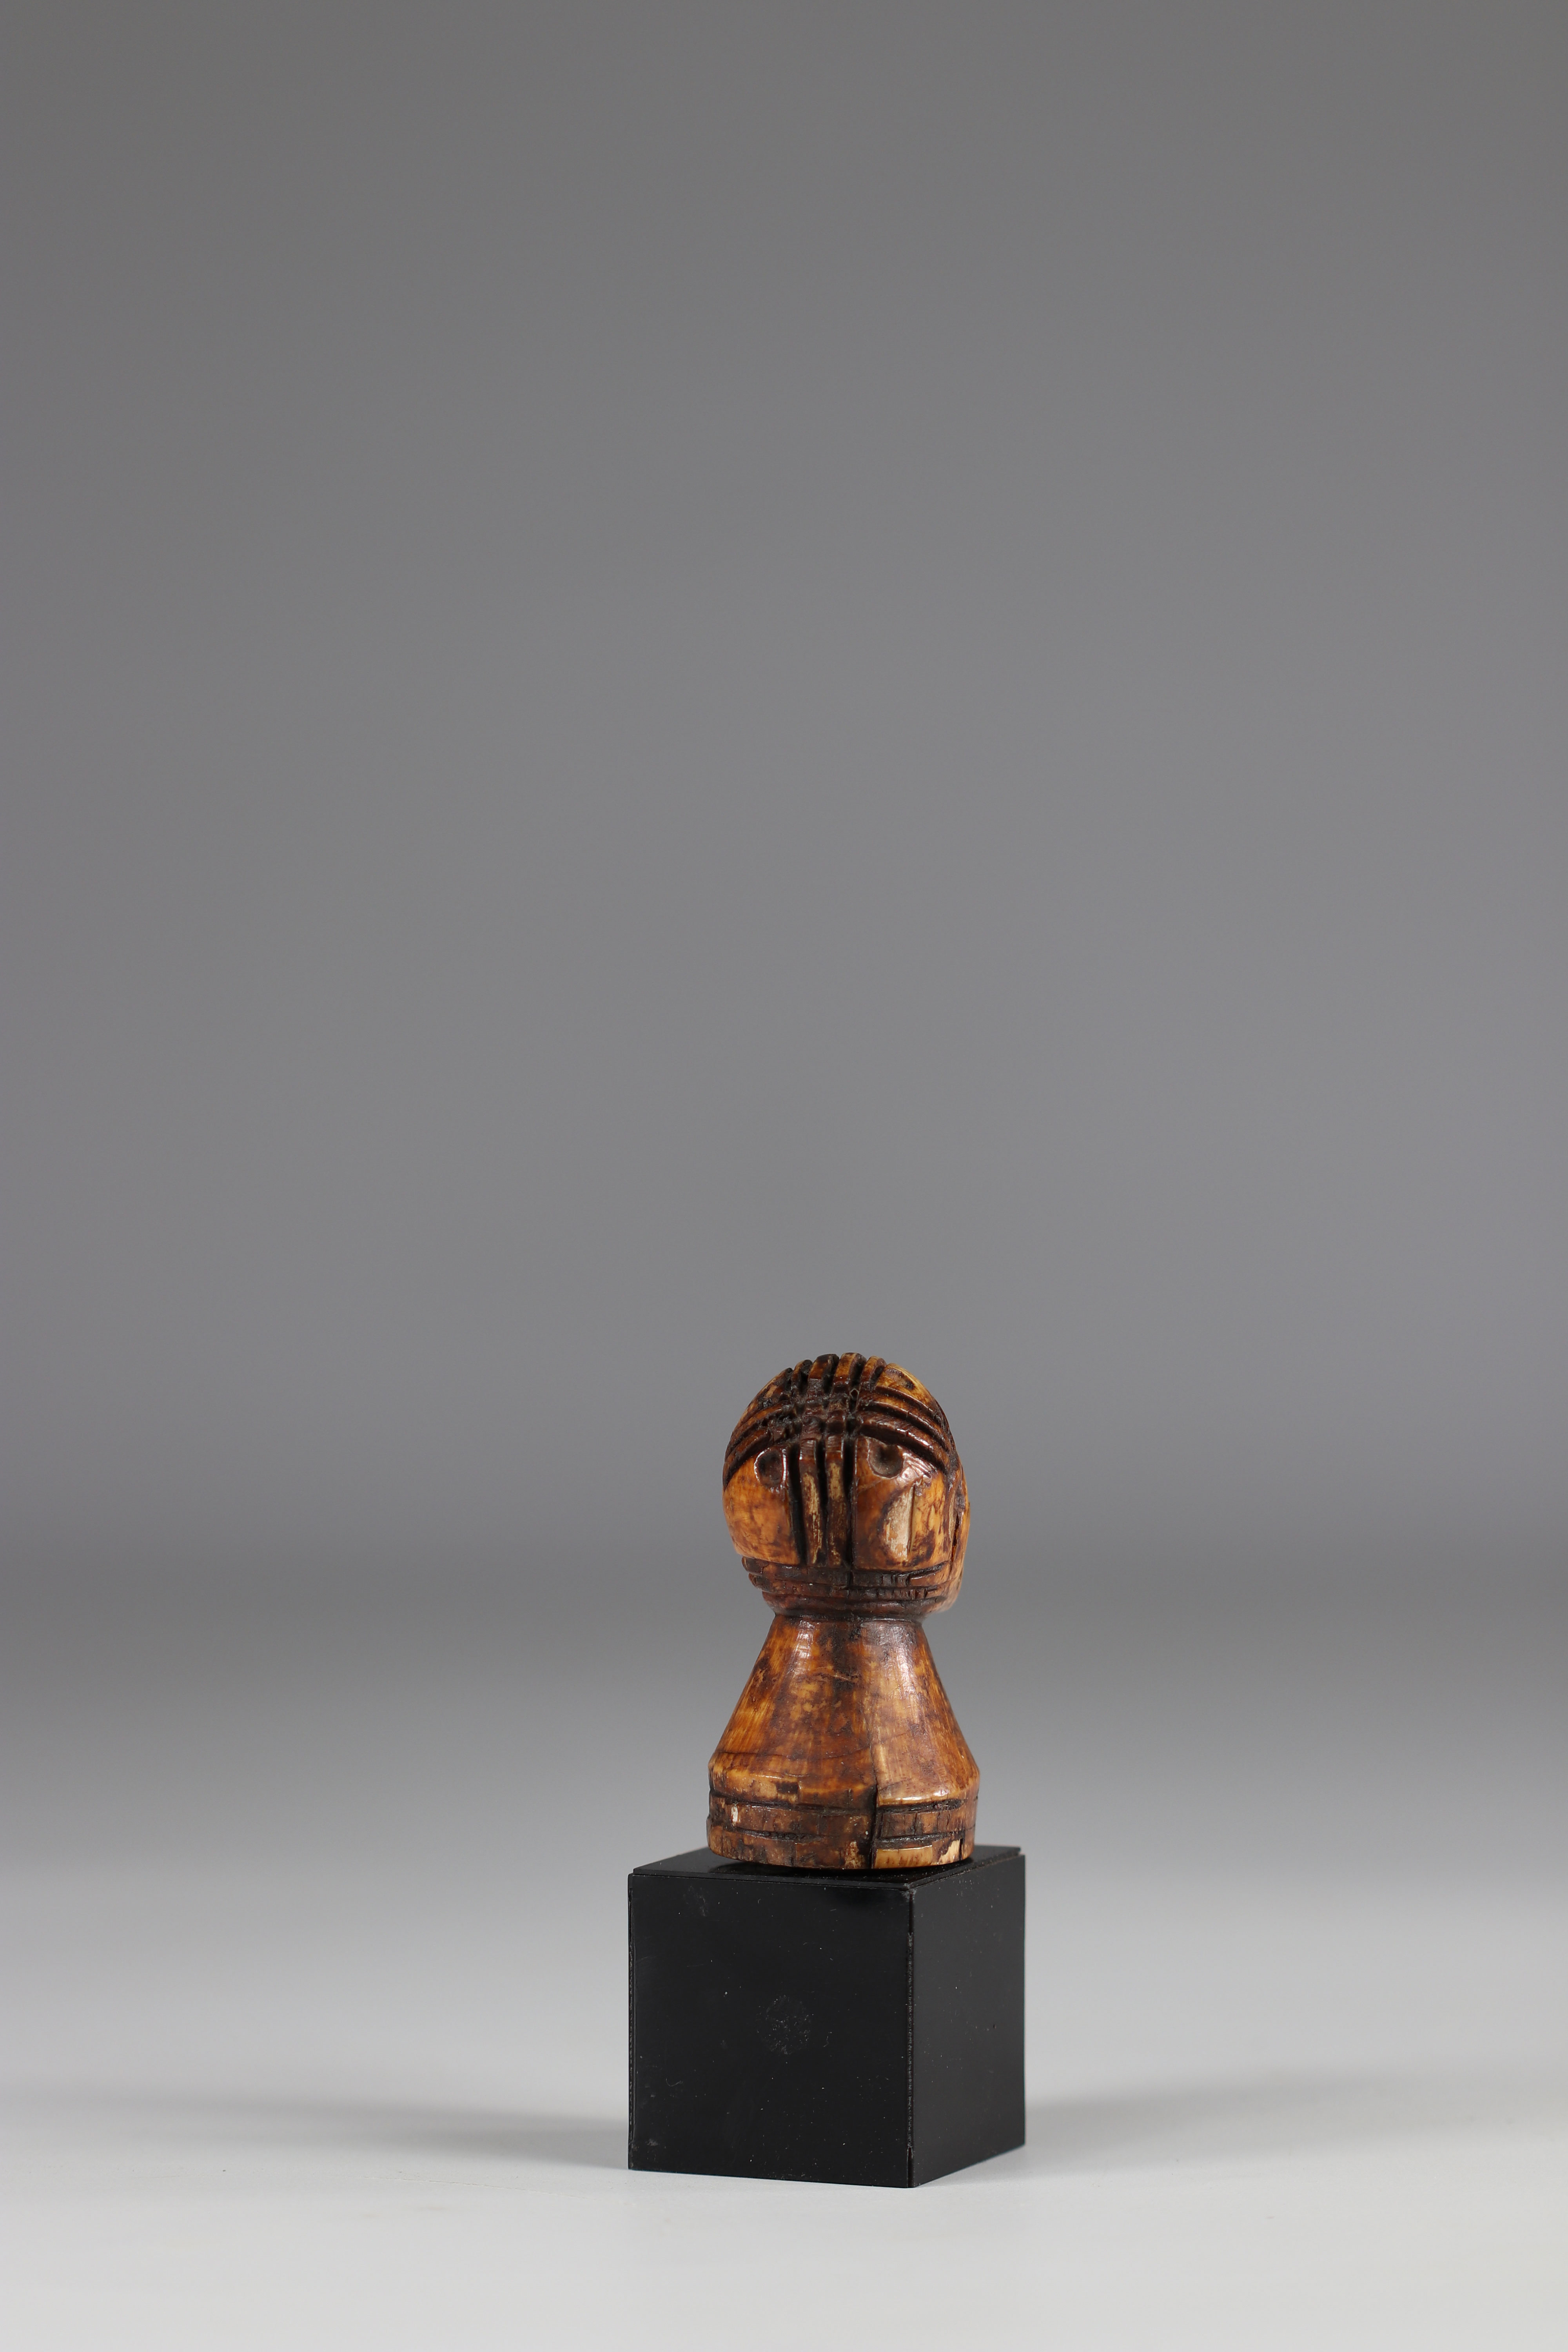 Small Yoruba head - beautiful patina - early 20th century - Nigeria - Image 2 of 4